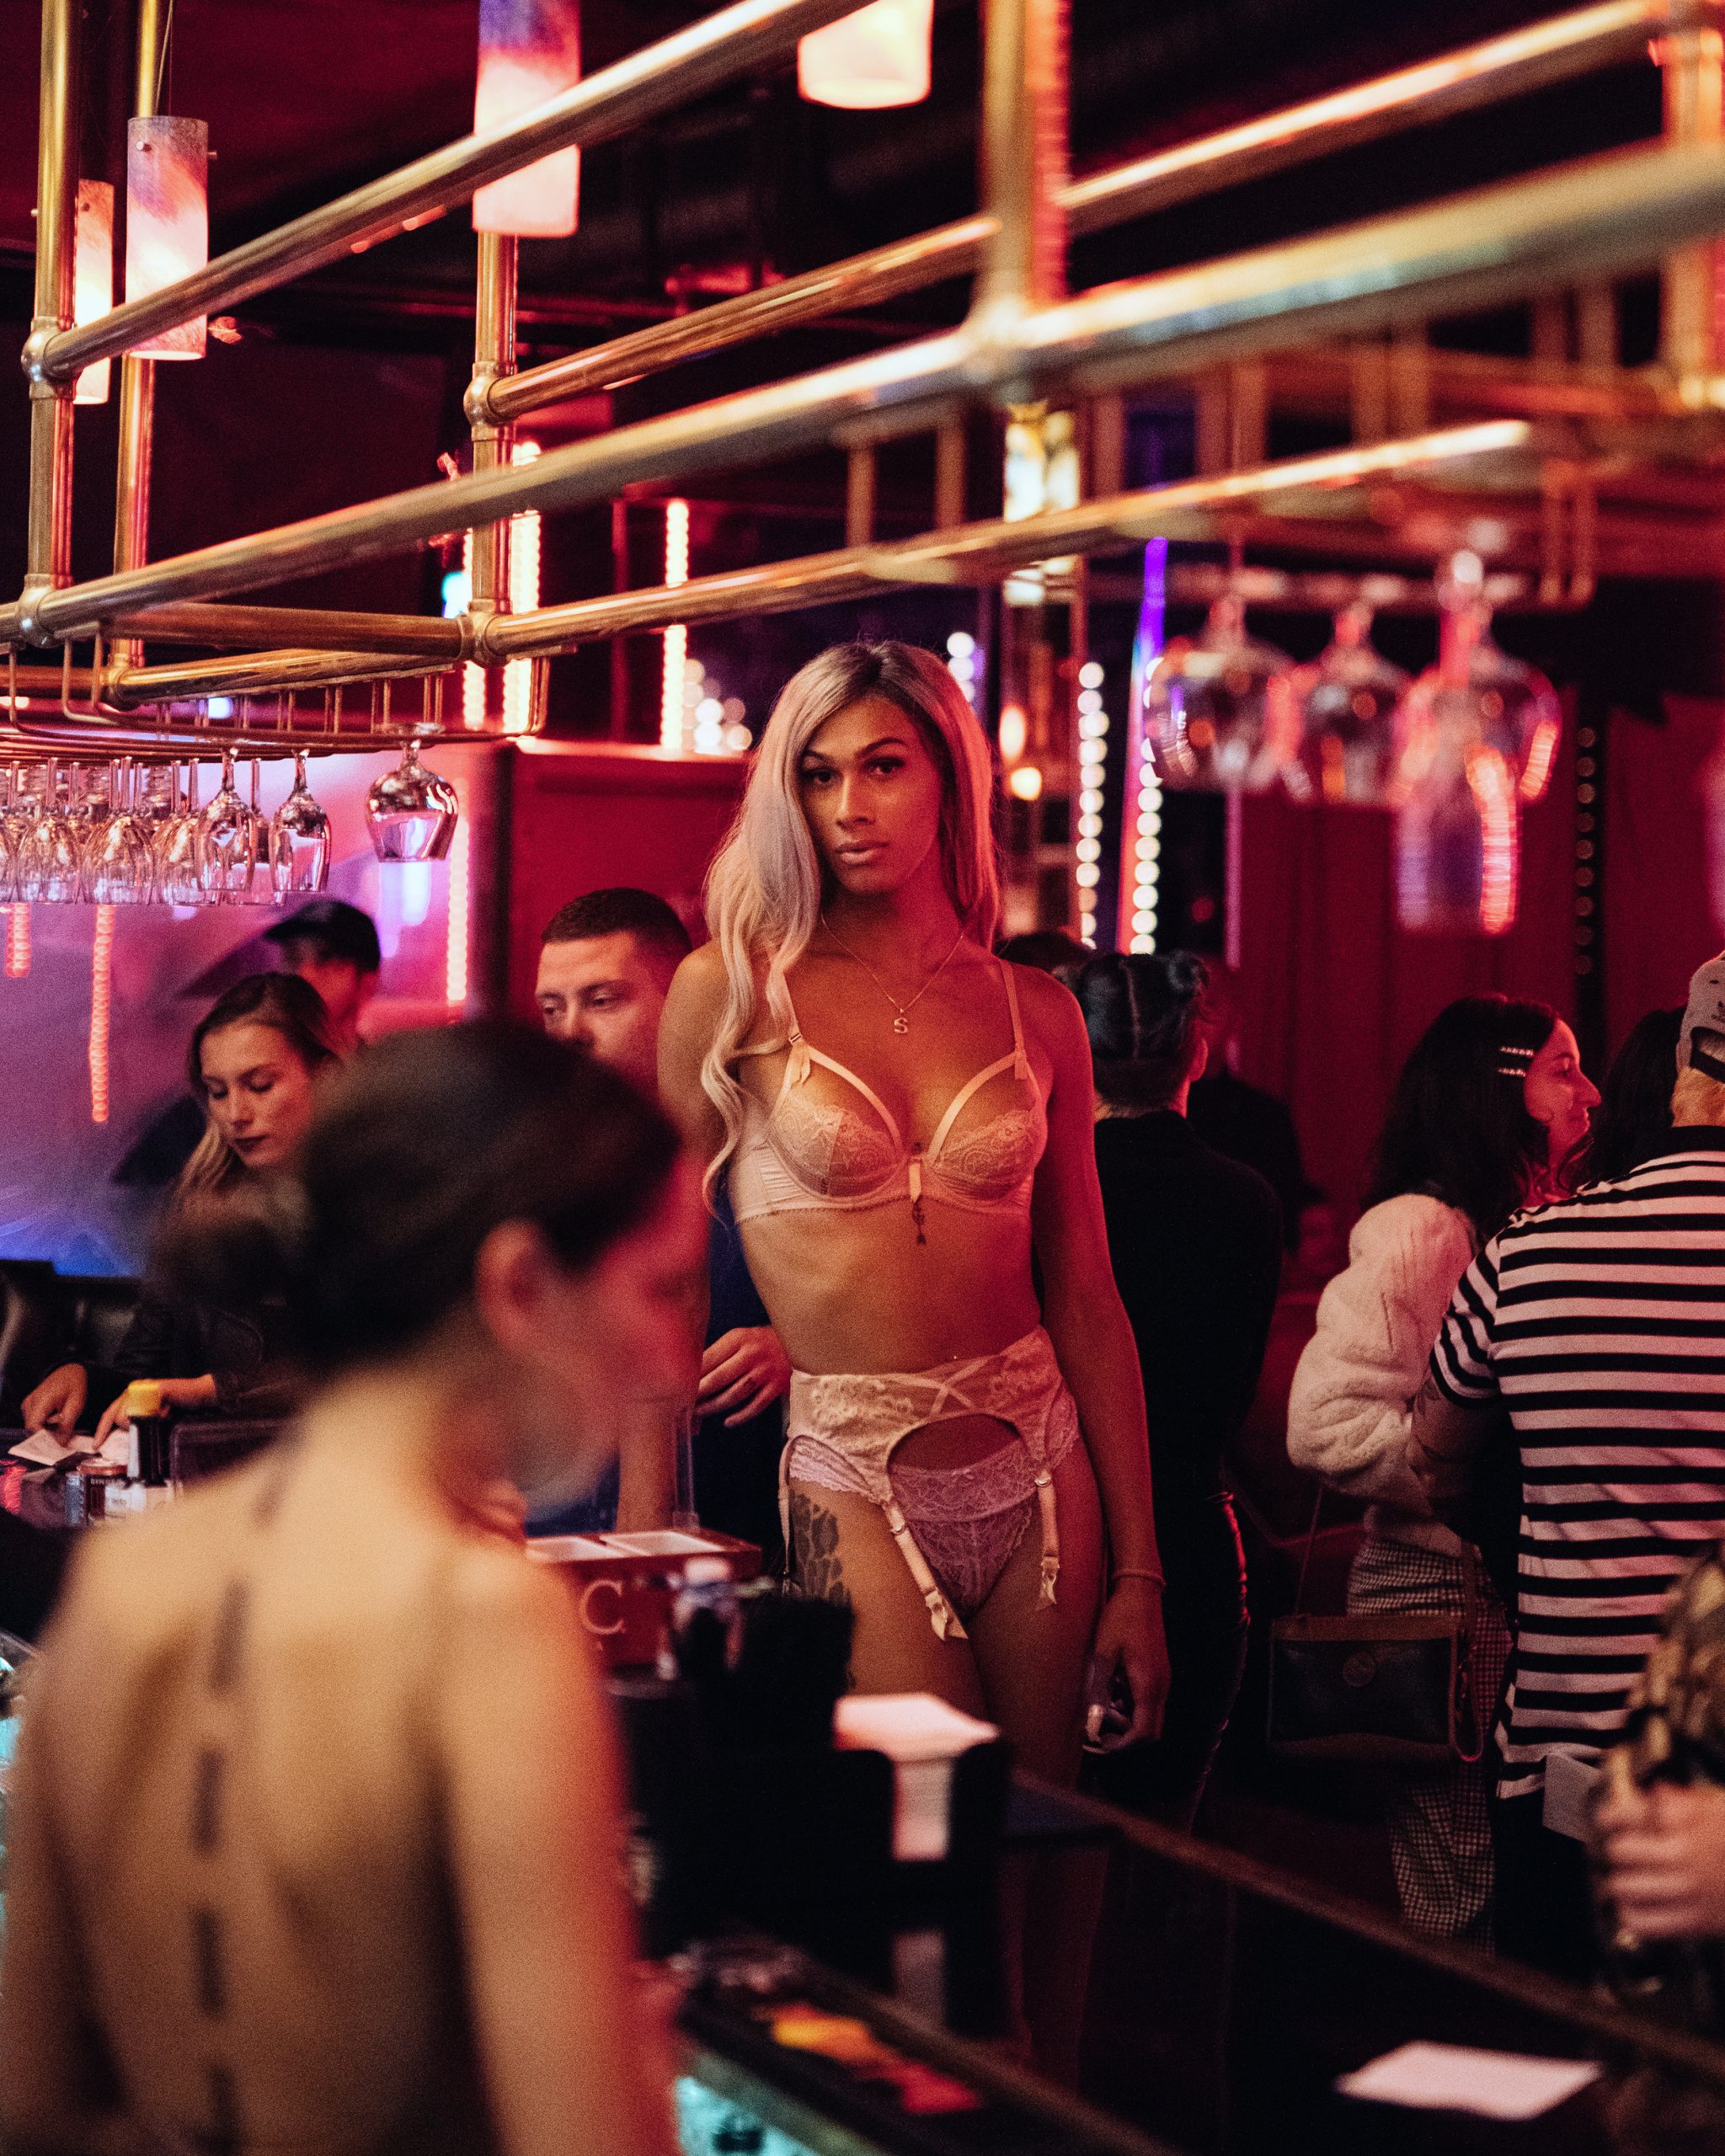 dora madden share transgender strip club photos